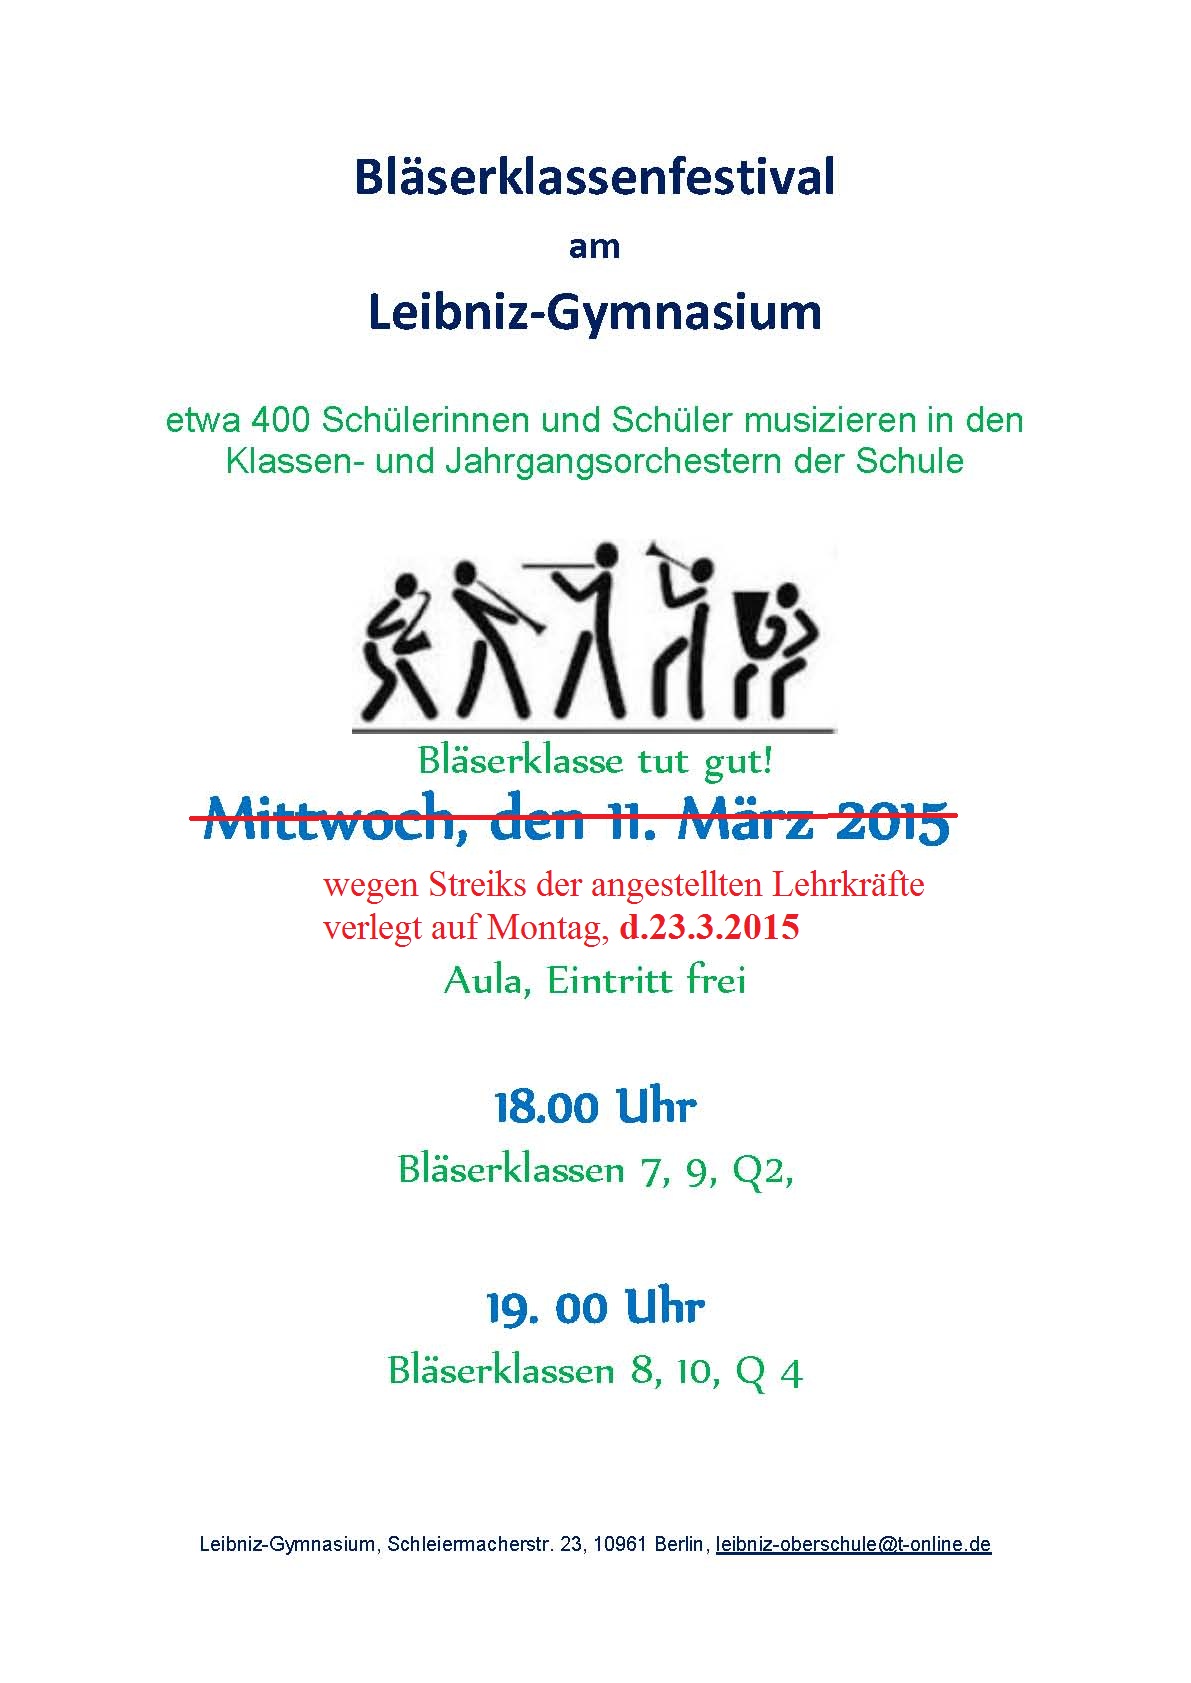 Bläserklassenfestival Leibniz15 Plakatstreik